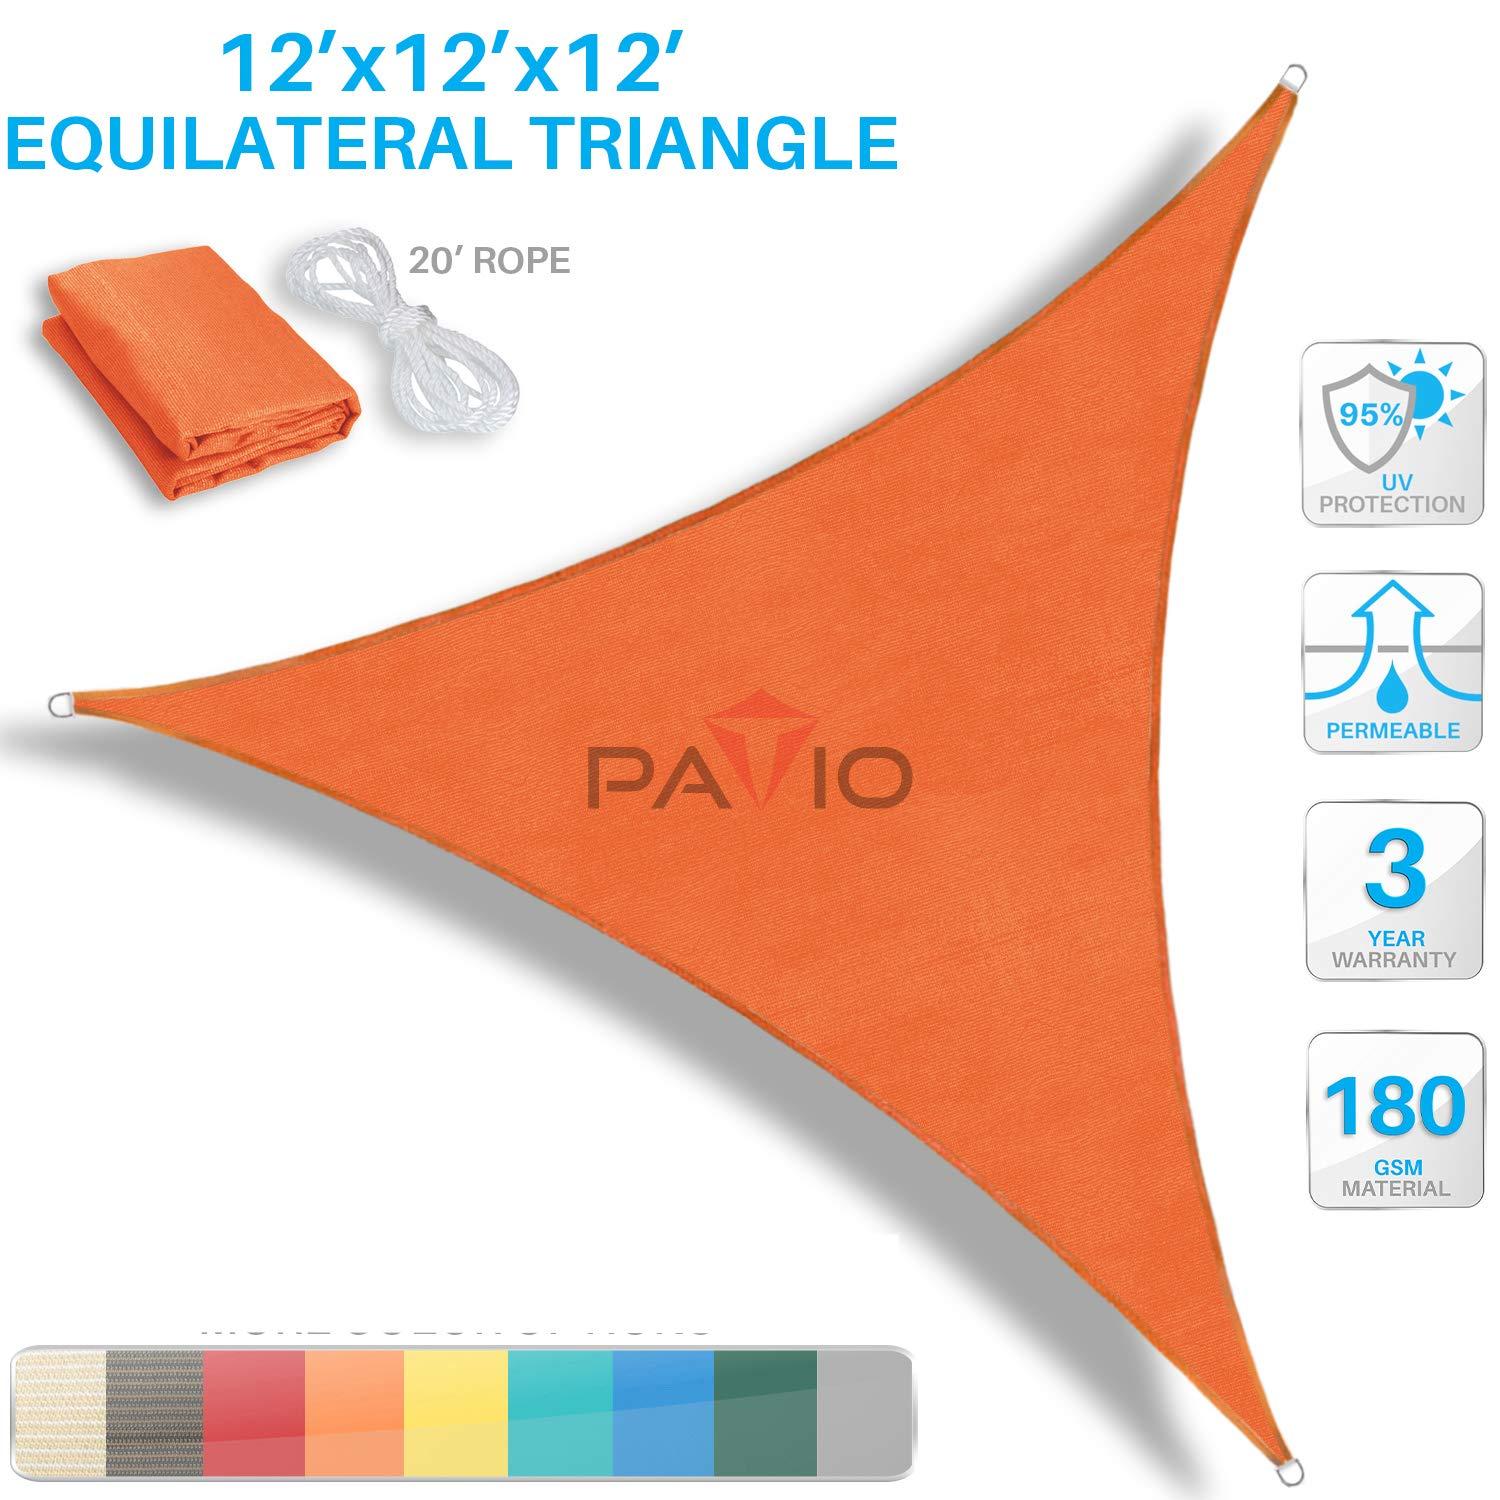 Patio Paradise Logo - Amazon.com : Patio Paradise 12' x12'x 12' Orange Sun Shade Sail ...